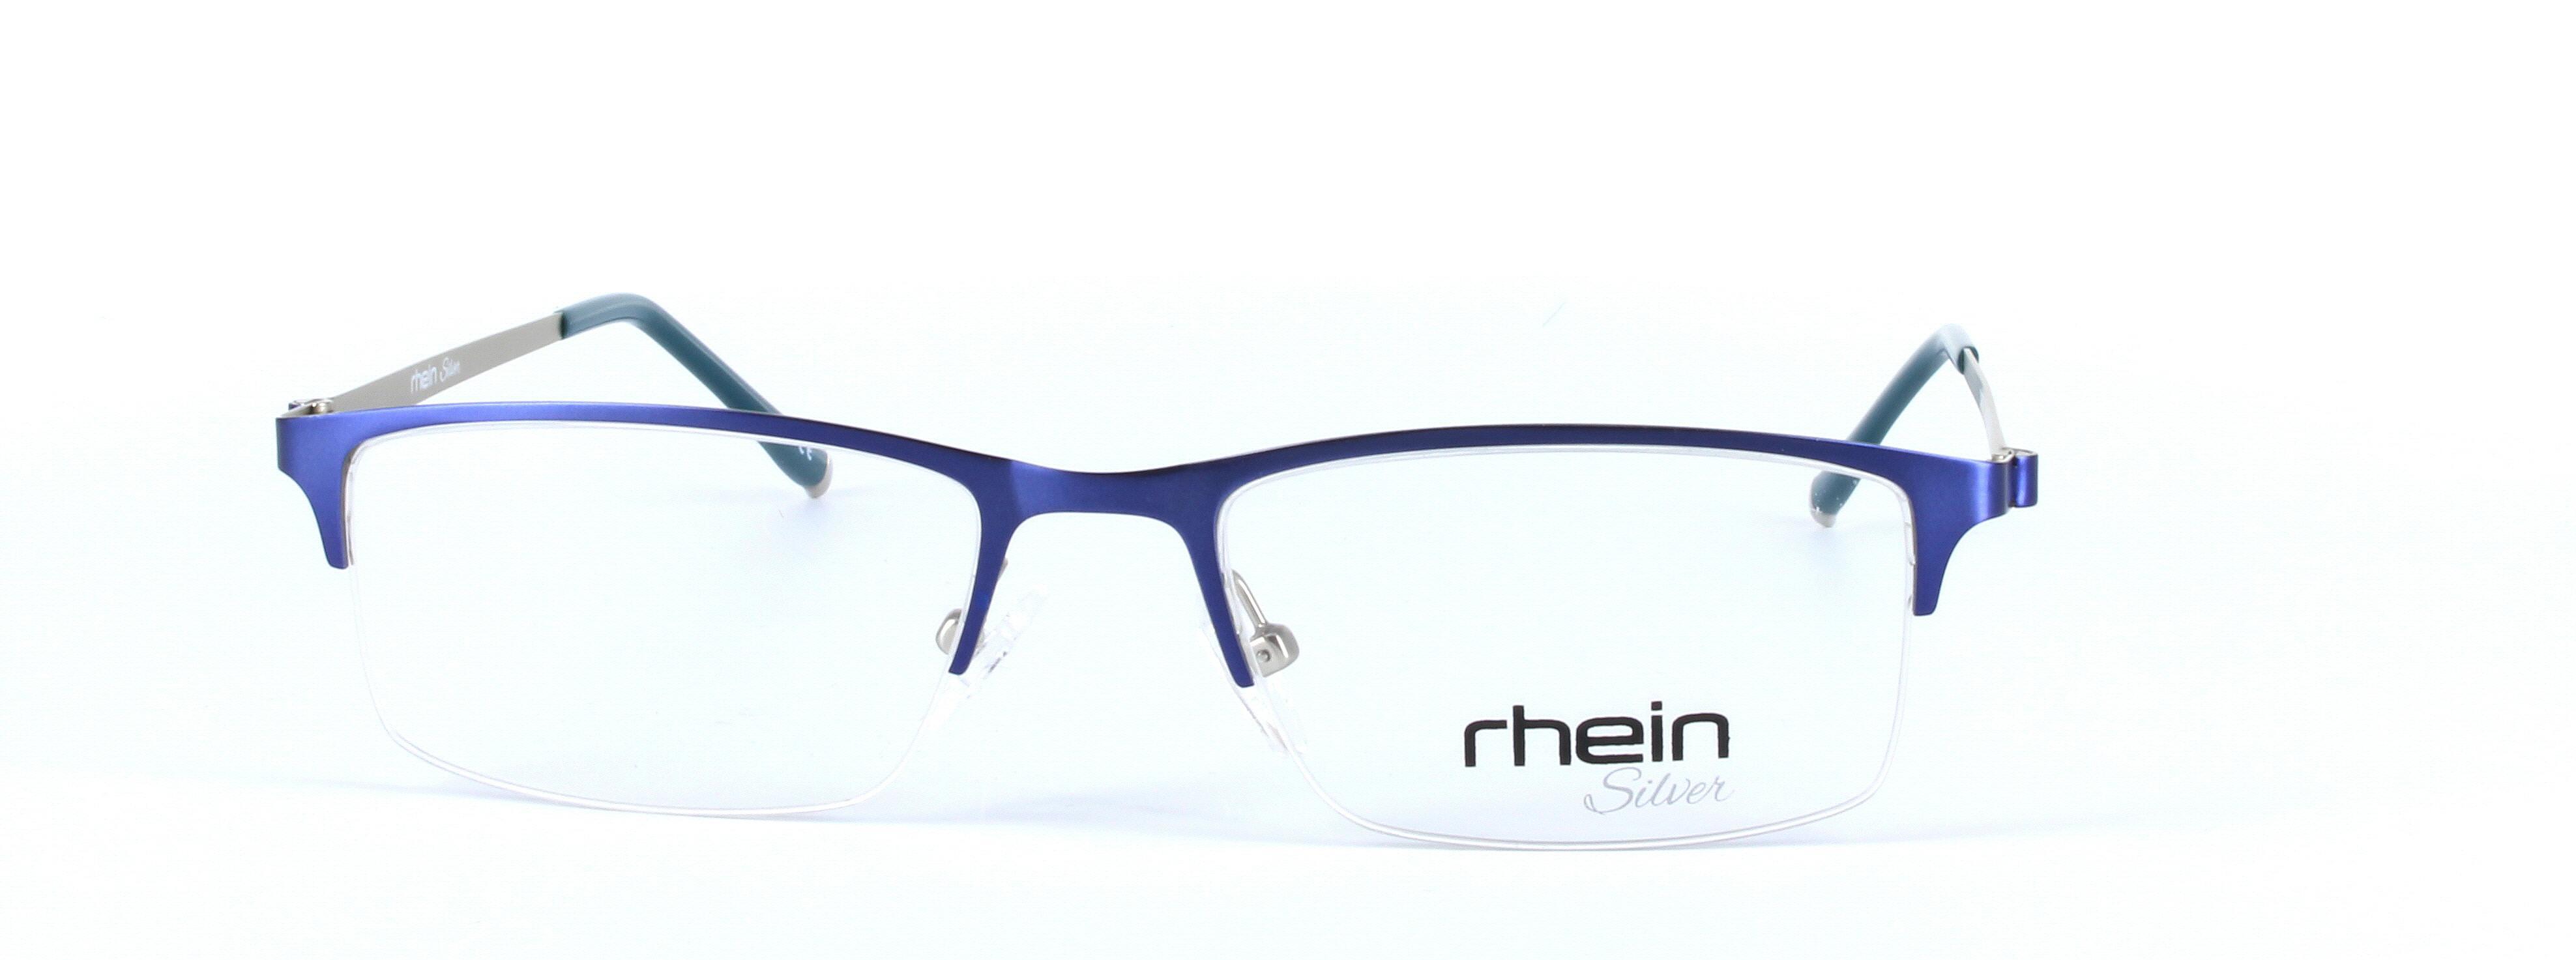 Kalem Blue Semi Rimless Rectangular Metal Glasses - Image View 5